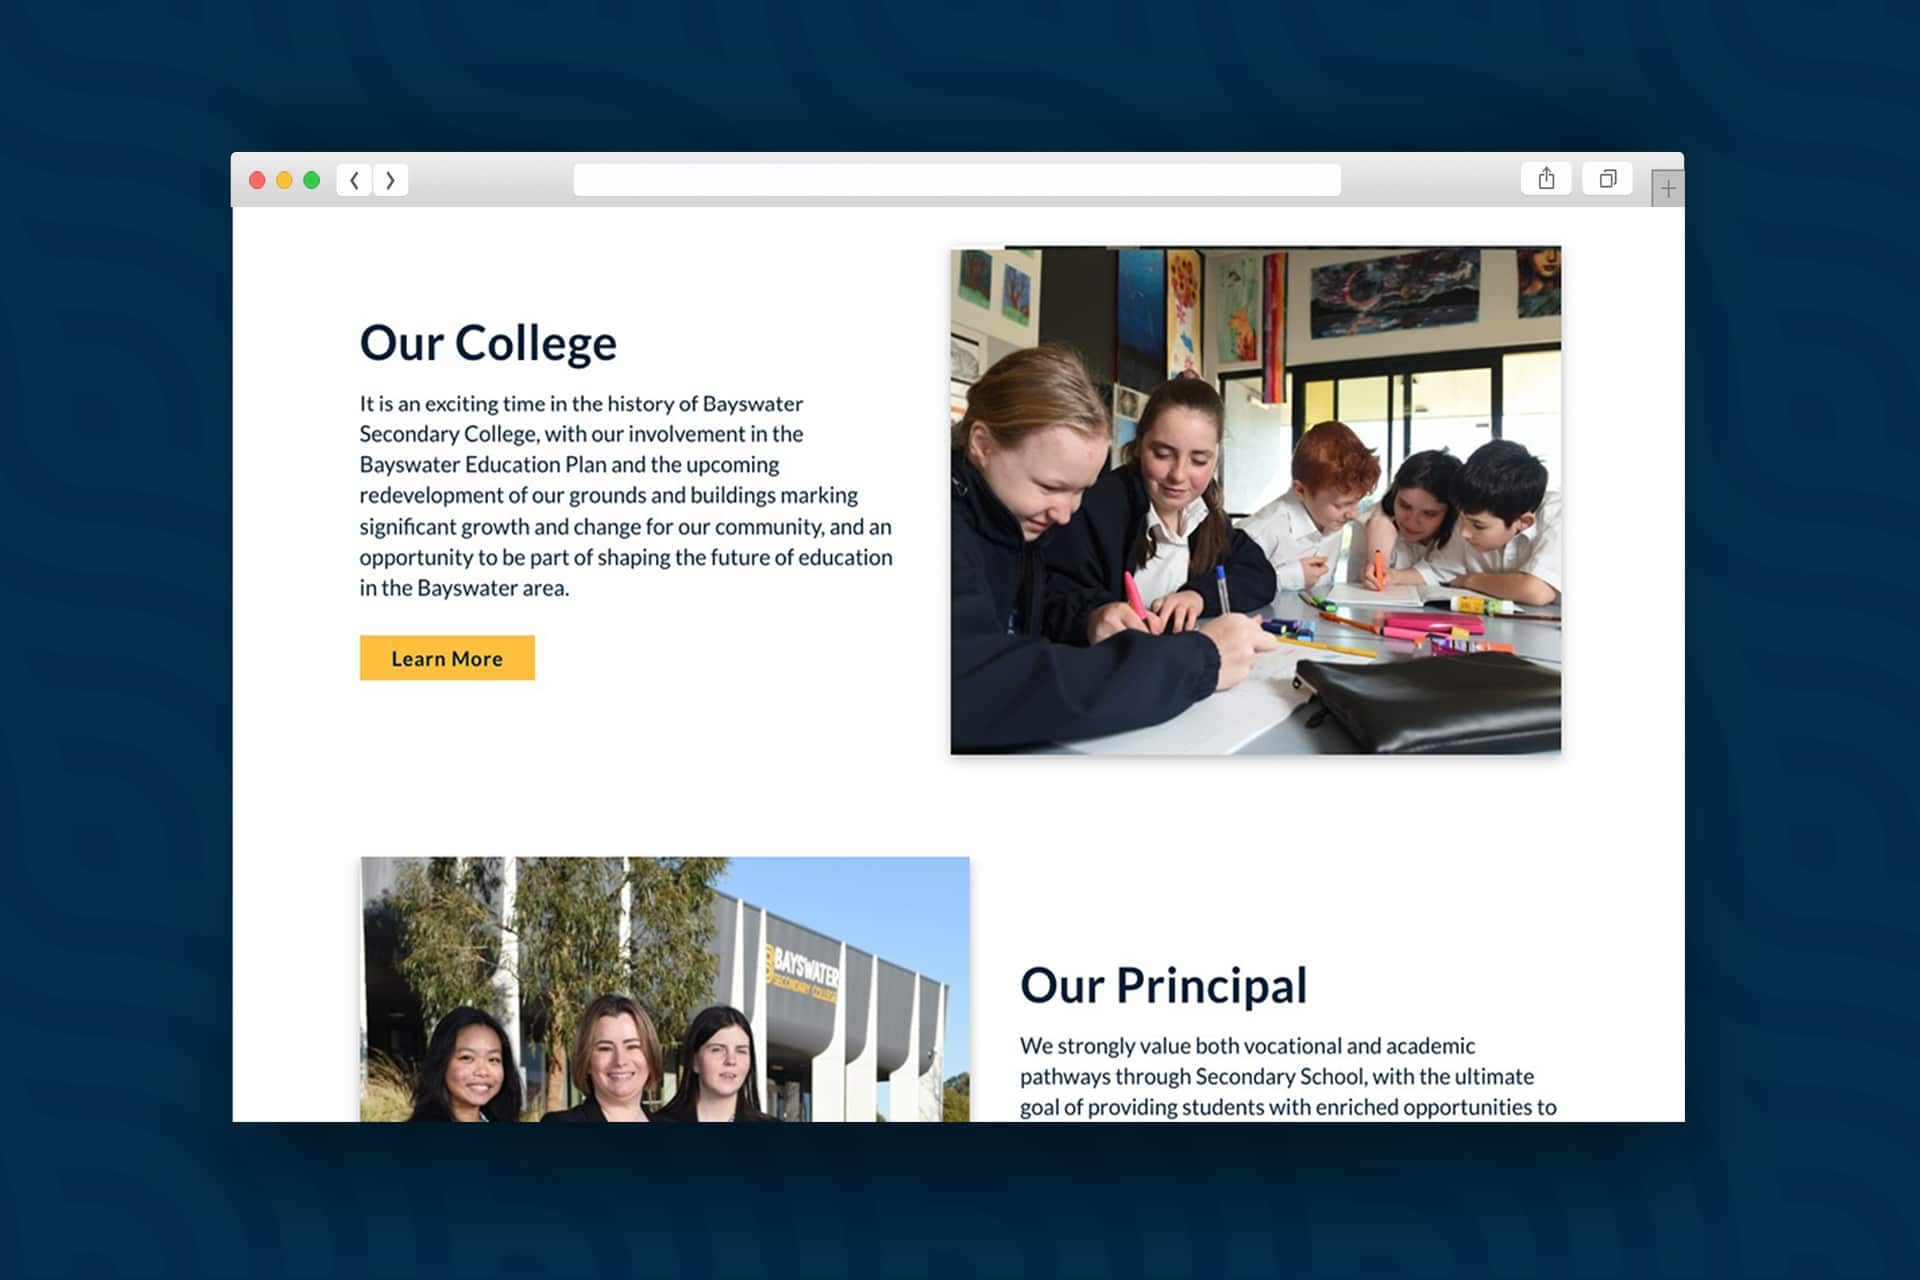 Bayswater Secondary College - Website Design & Development by Beyond Web